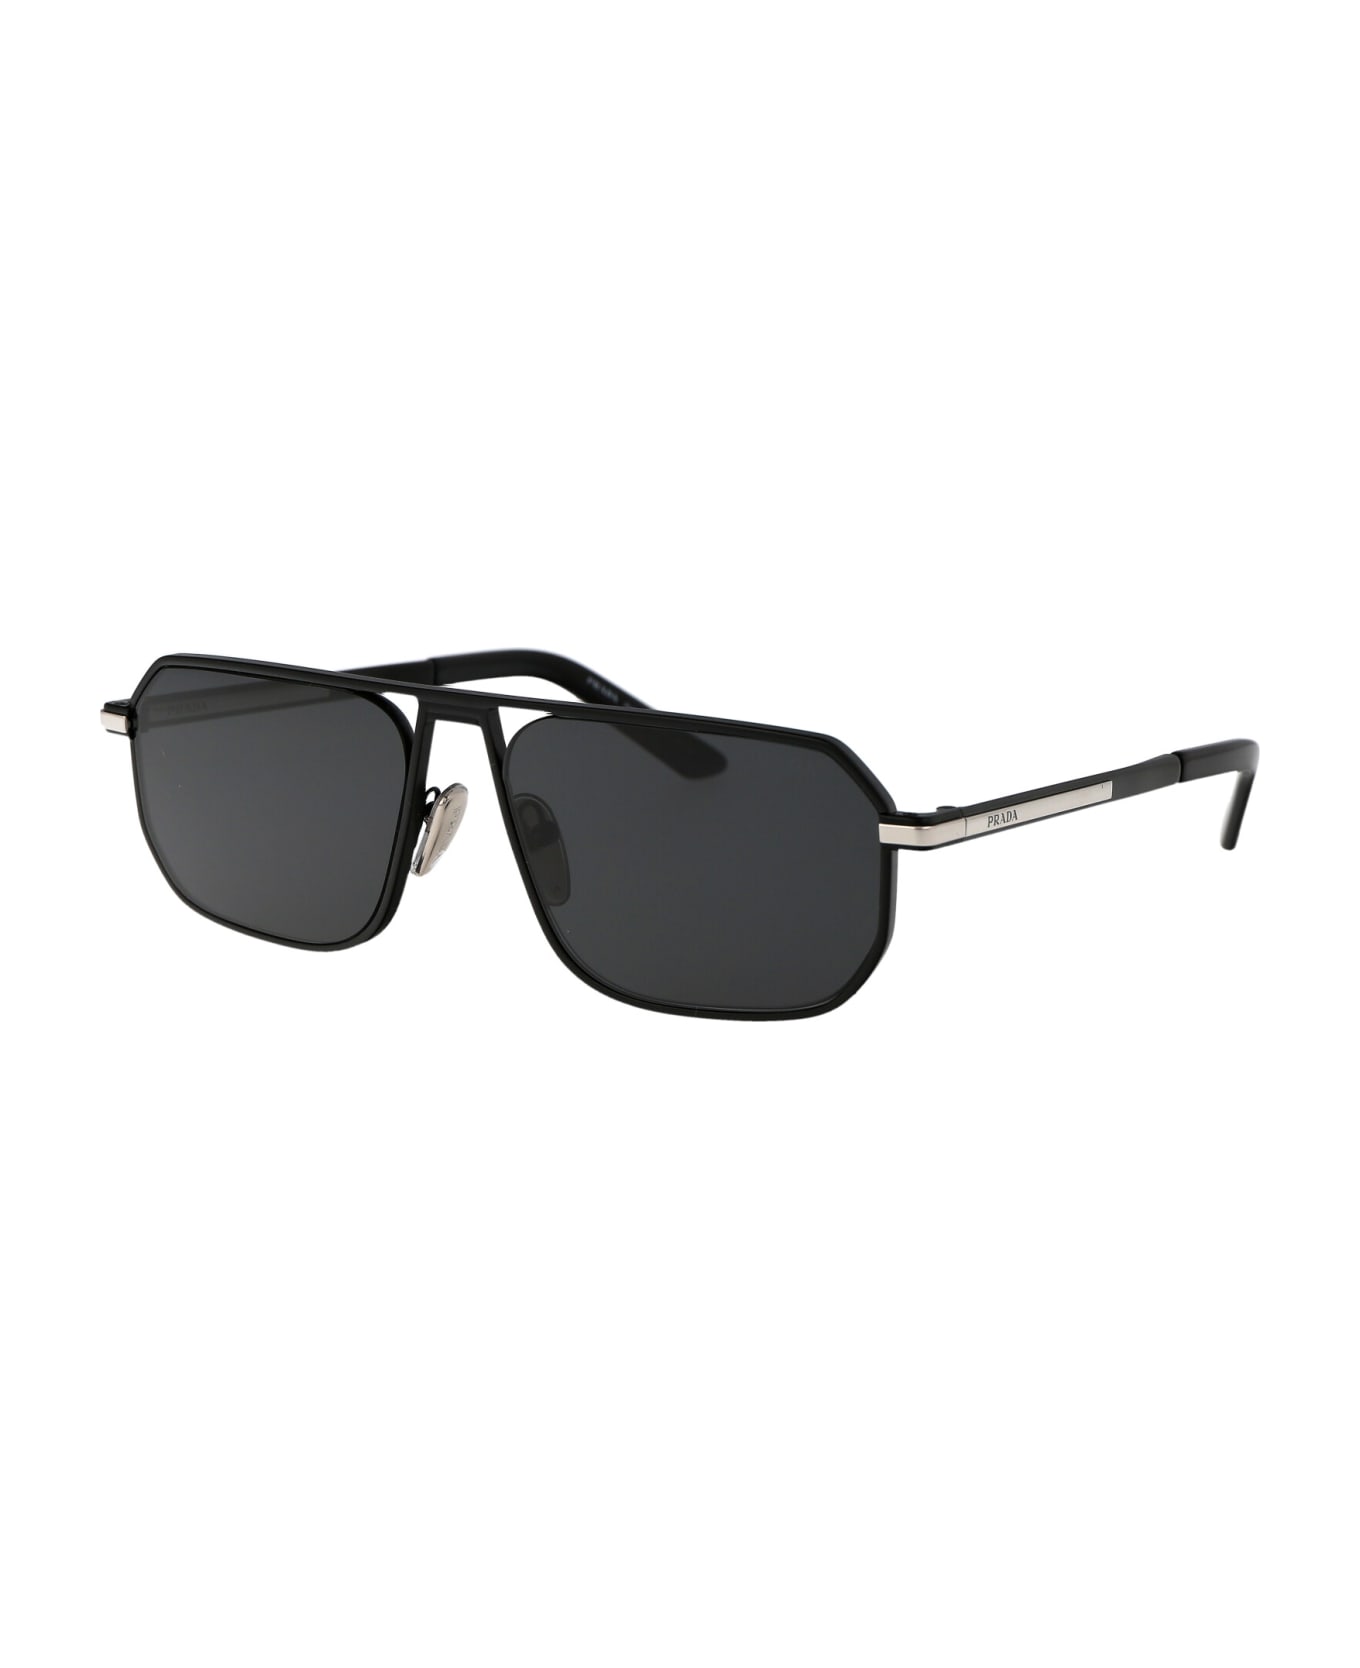 Prada Eyewear 0pr A53s Sunglasses - 1BO5S0 MATTE BLACK